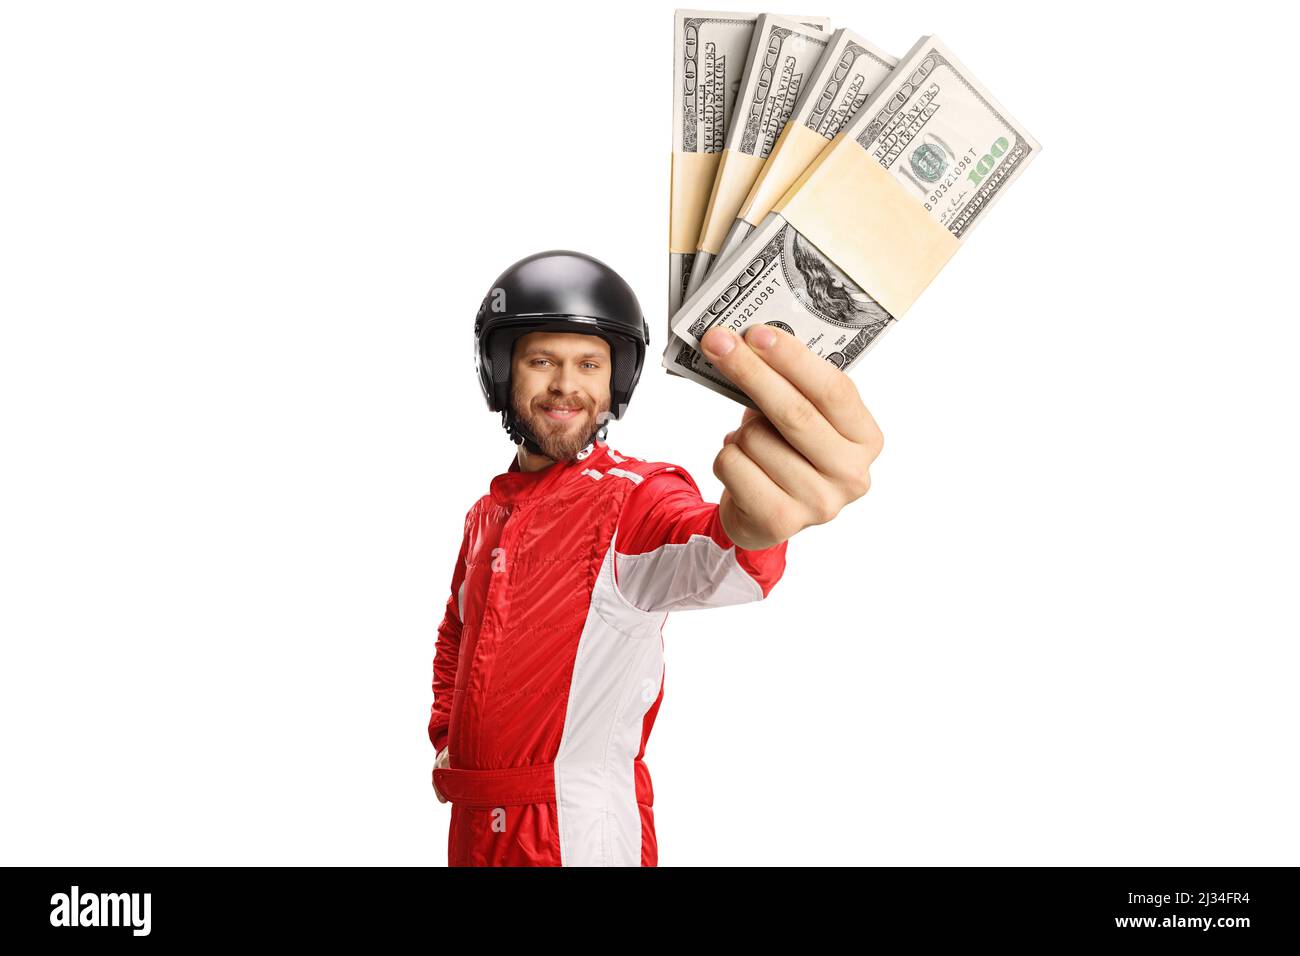 Racer holding stacks of money and smiling isolated on white background Stock Photo